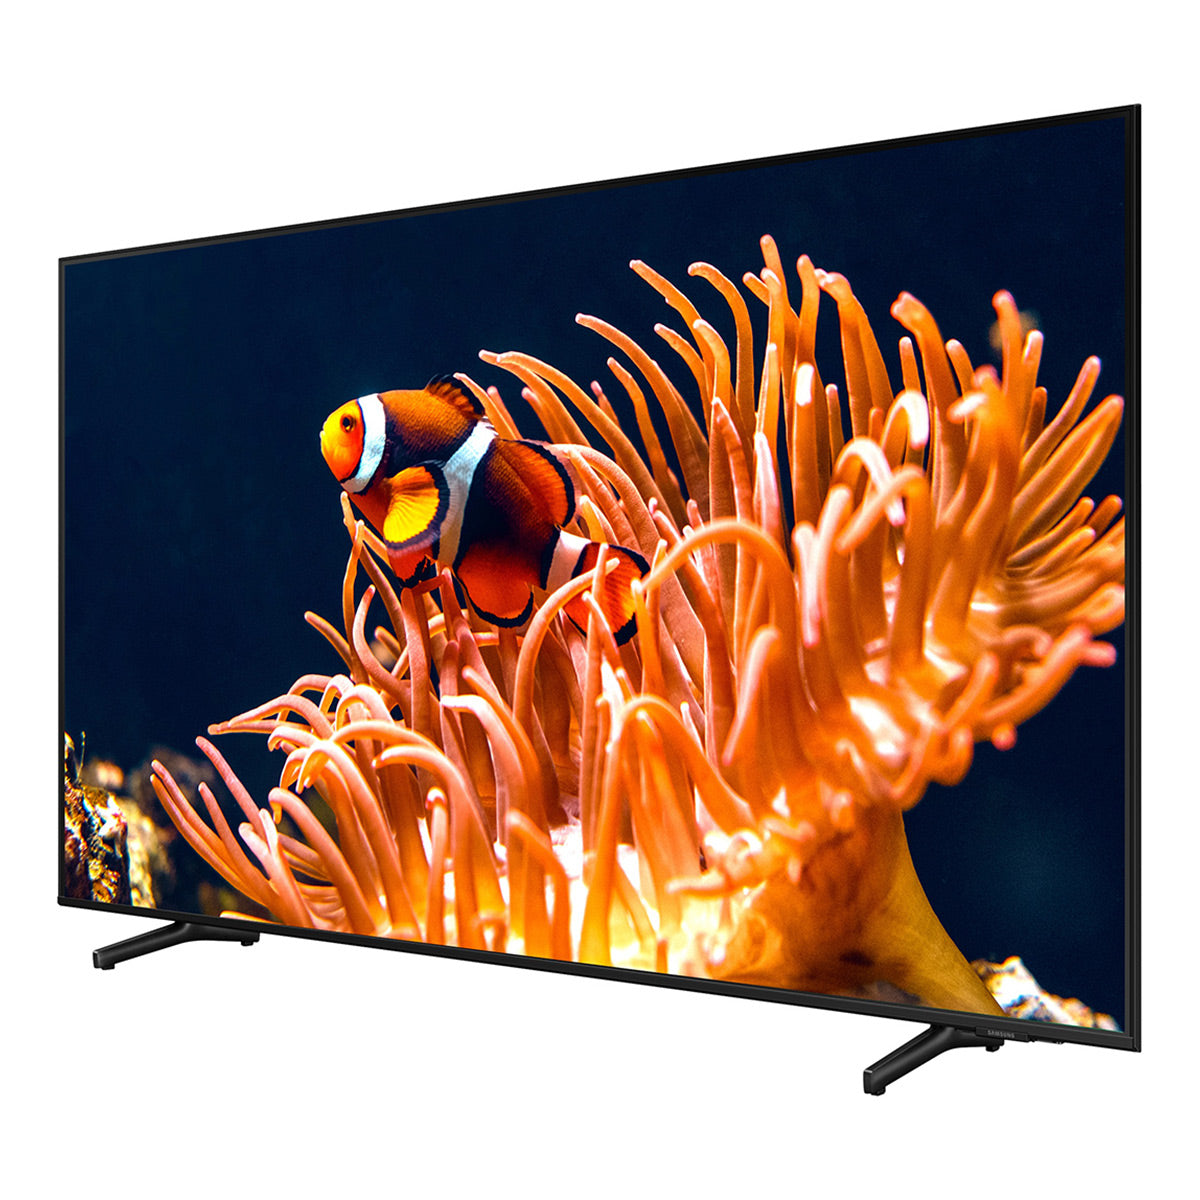 Samsung UN65DU8000 65" Crystal UHD Smart TV (2024)